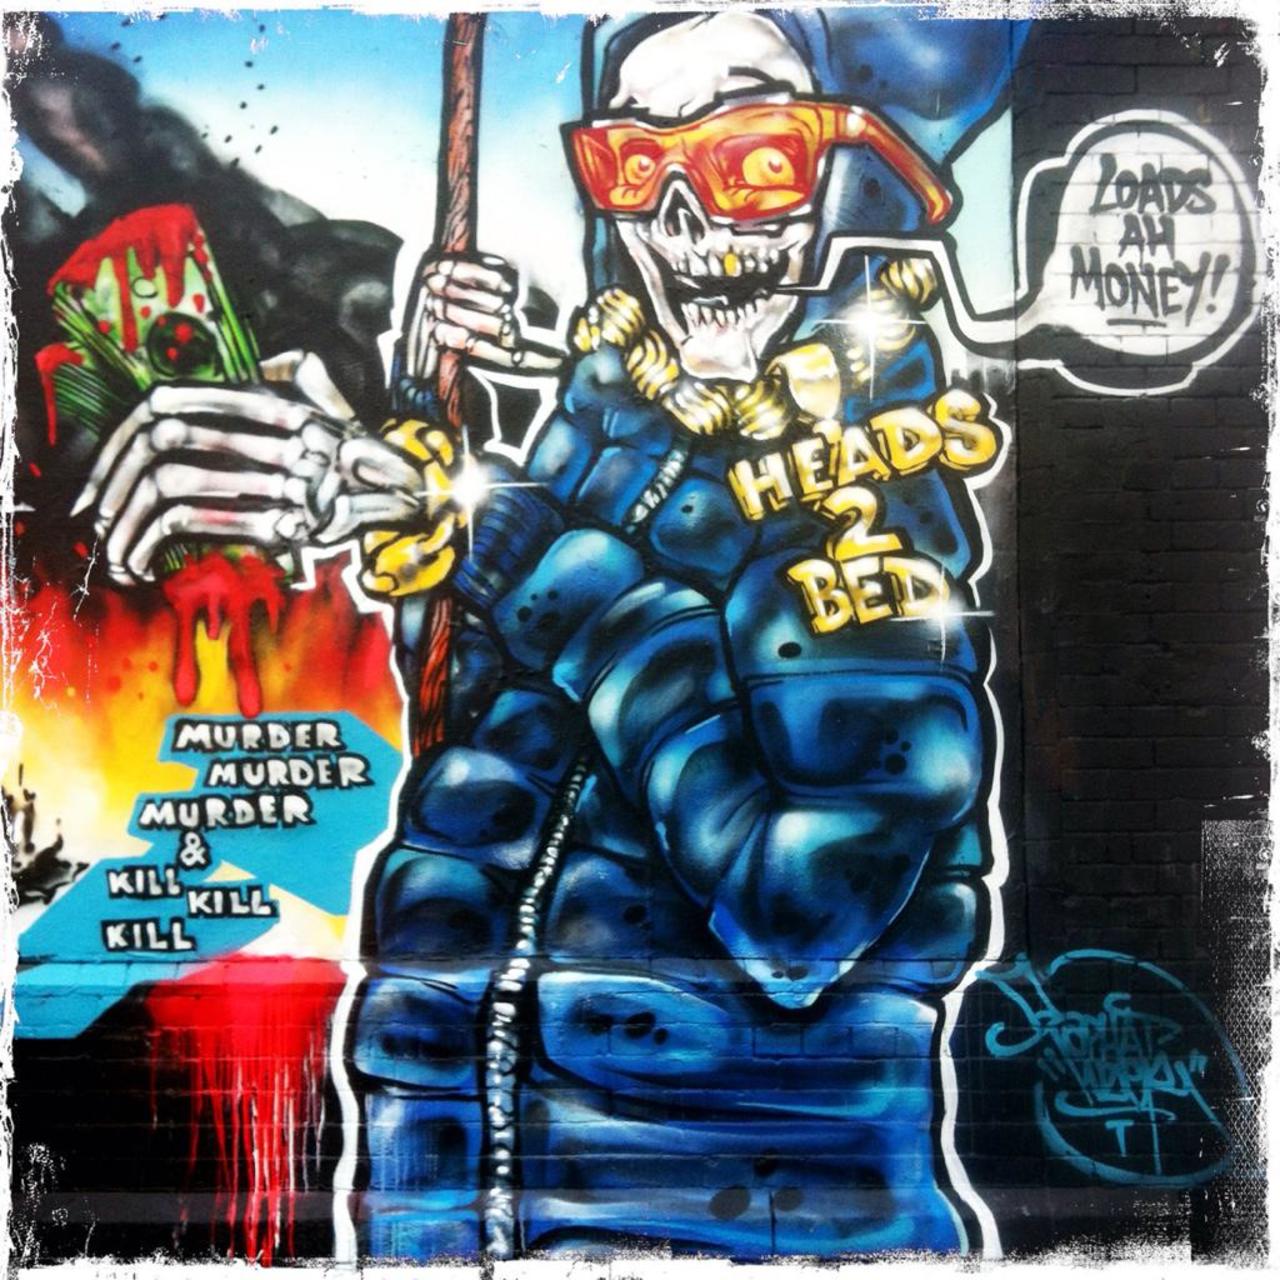 RT @BrickLaneArt: Murder Murder Murder - @tizerone with at the Shoreditch Art Wall #shoreditchcurtain #streetart #graffiti http://t.co/mHFqfm3TUB